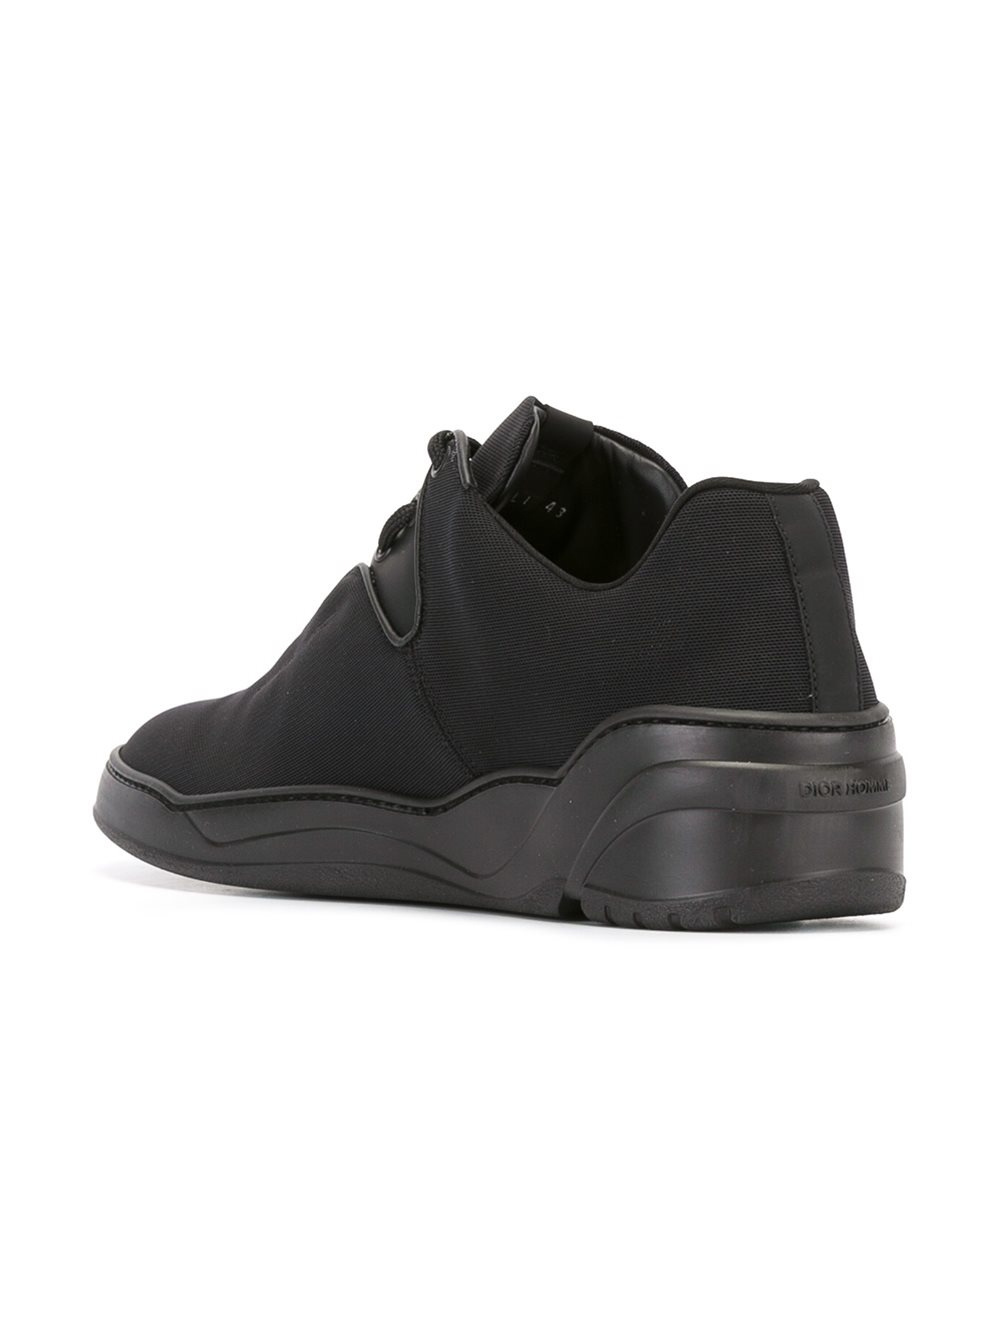 Dior Homme 'B17' Sneakers in Black for Men | Lyst UK